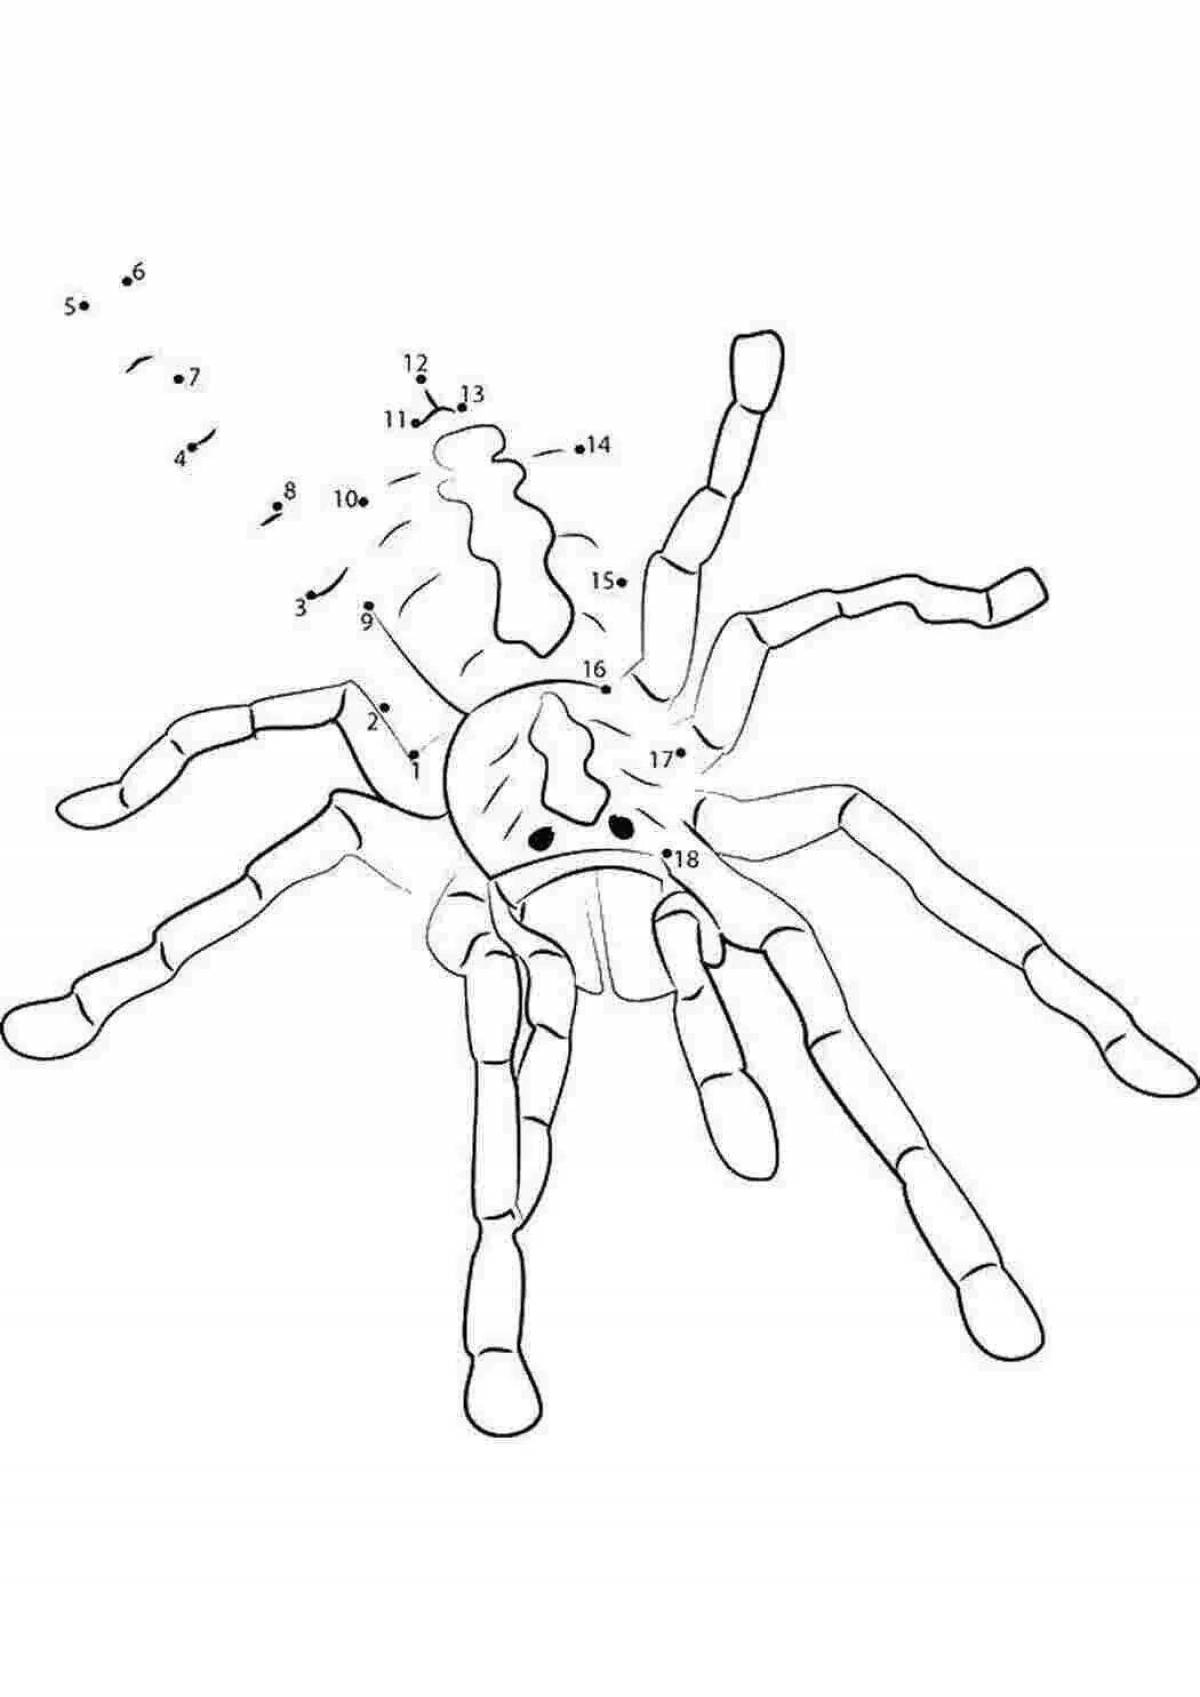 Tarantula spider coloring page